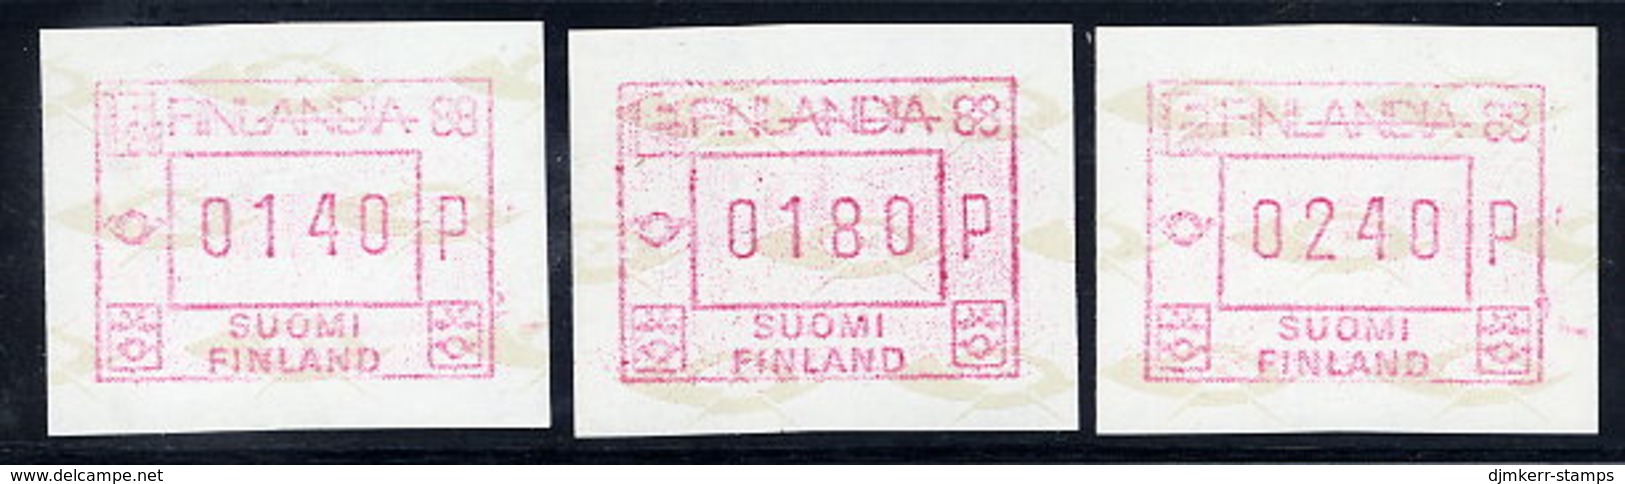 FINLAND 1988 FINLANDIA '88  Issue 3 Different Values MNH / ** .  Michel 4 - Machine Labels [ATM]